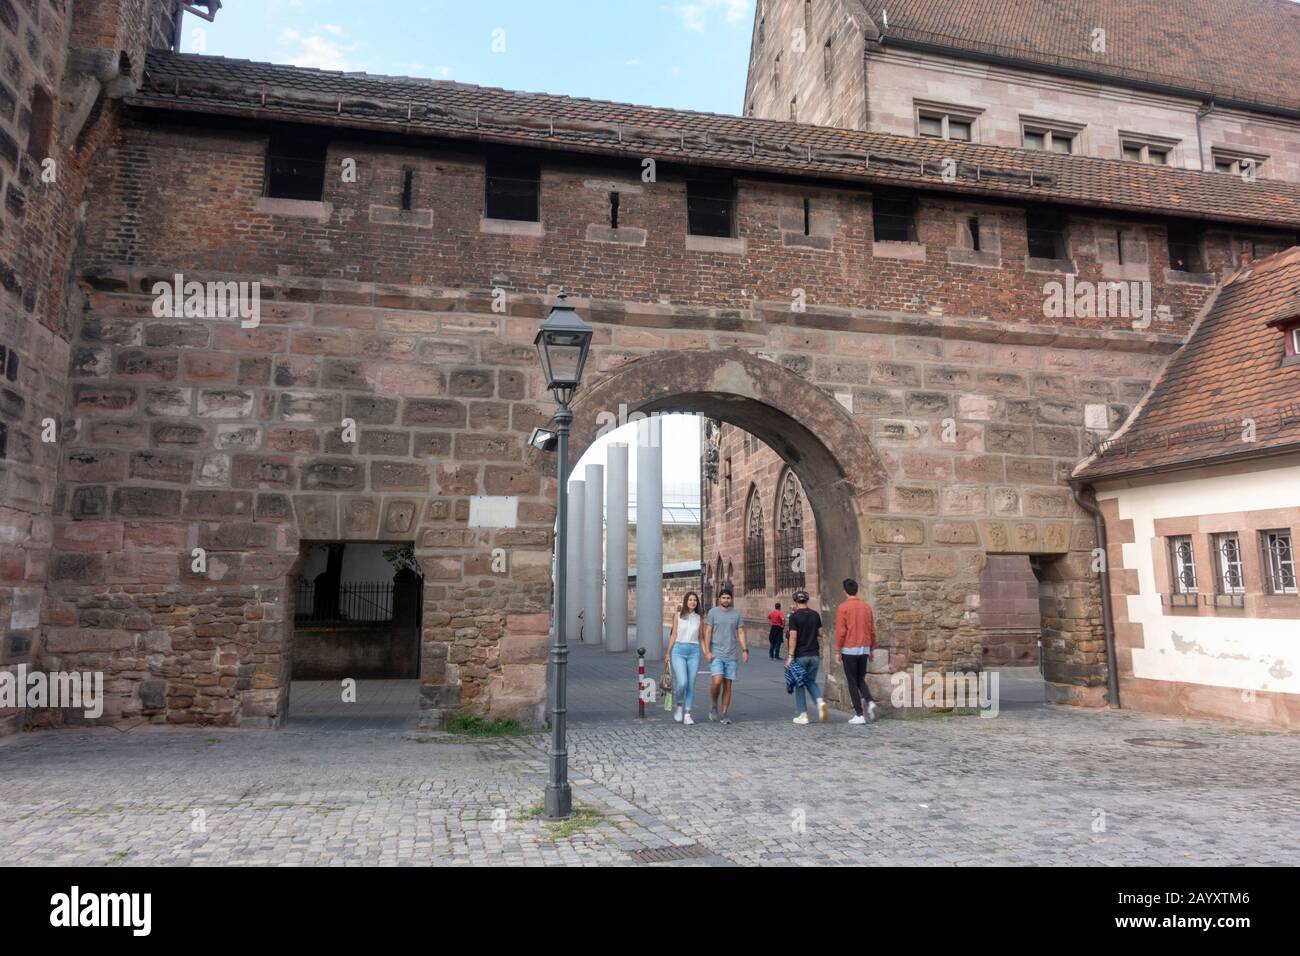 Kartäusertor, part of the historic city walls around the Old Town in Nuremberg, Bavaria, Germany. Stock Photo